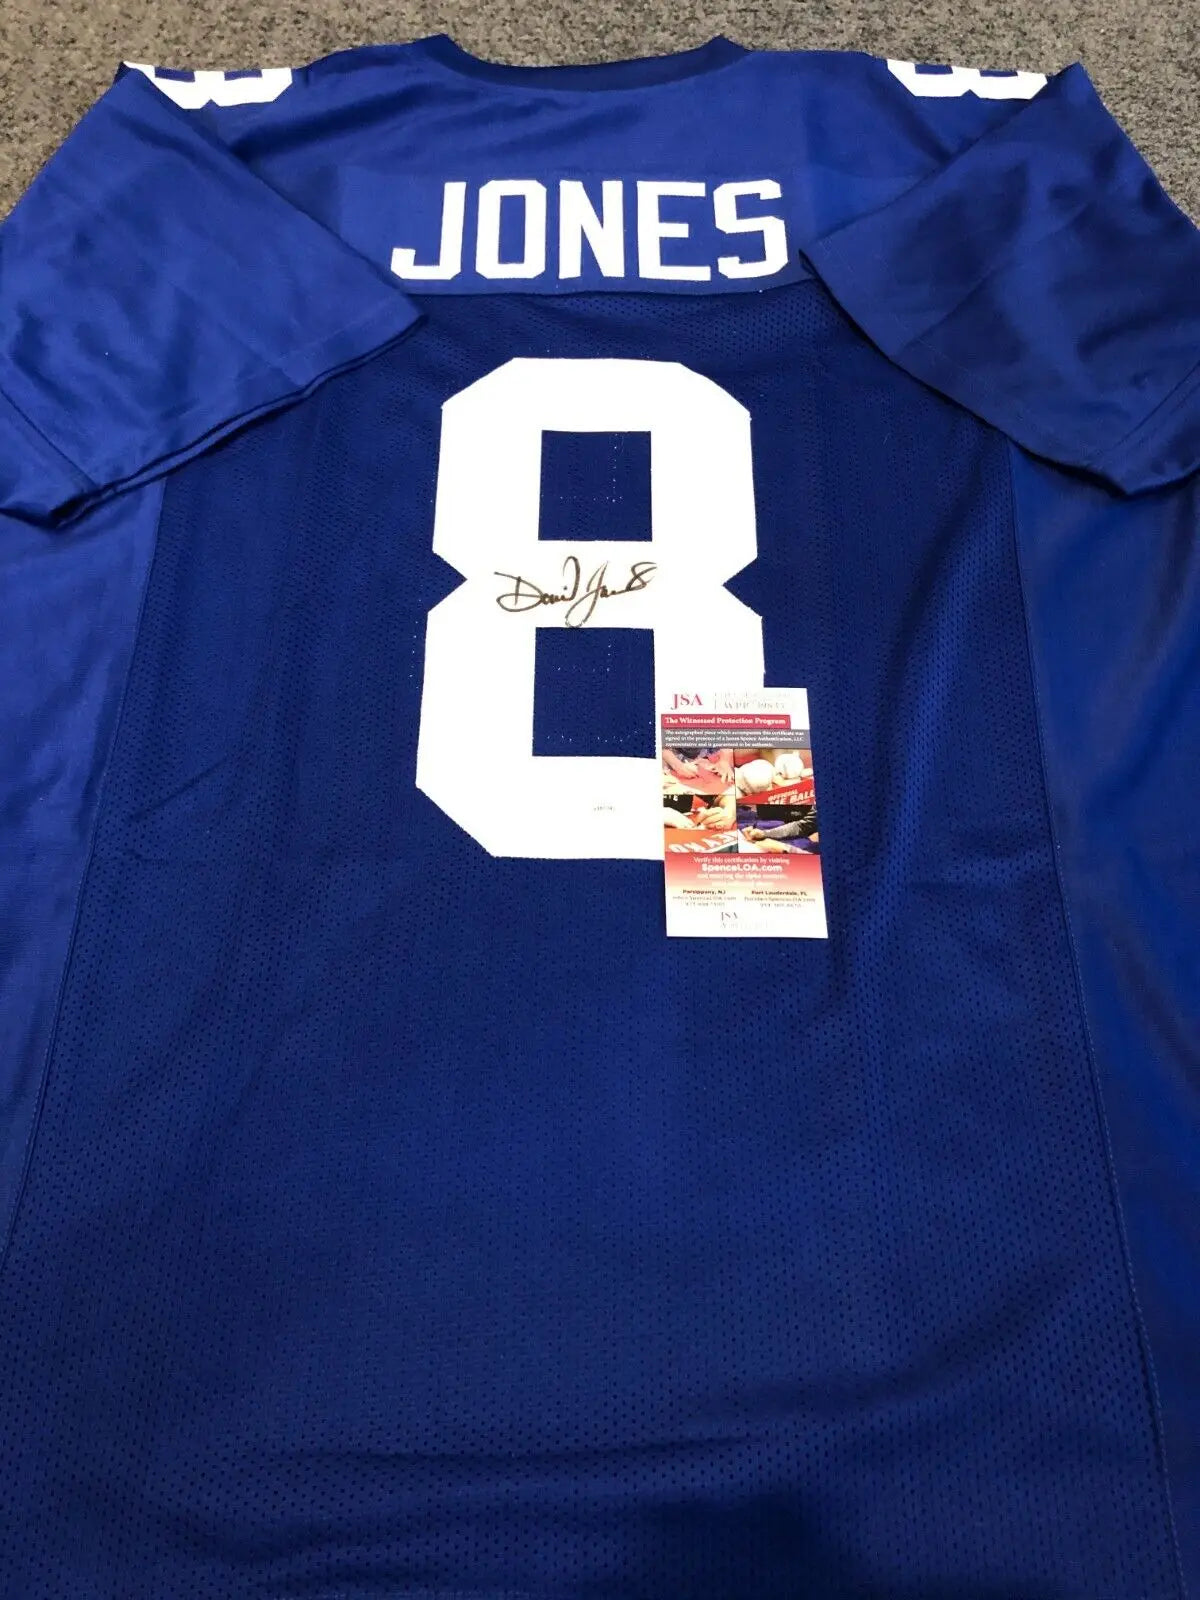 footballcollectible Daniel Jones Autographed New York Giants Jersey